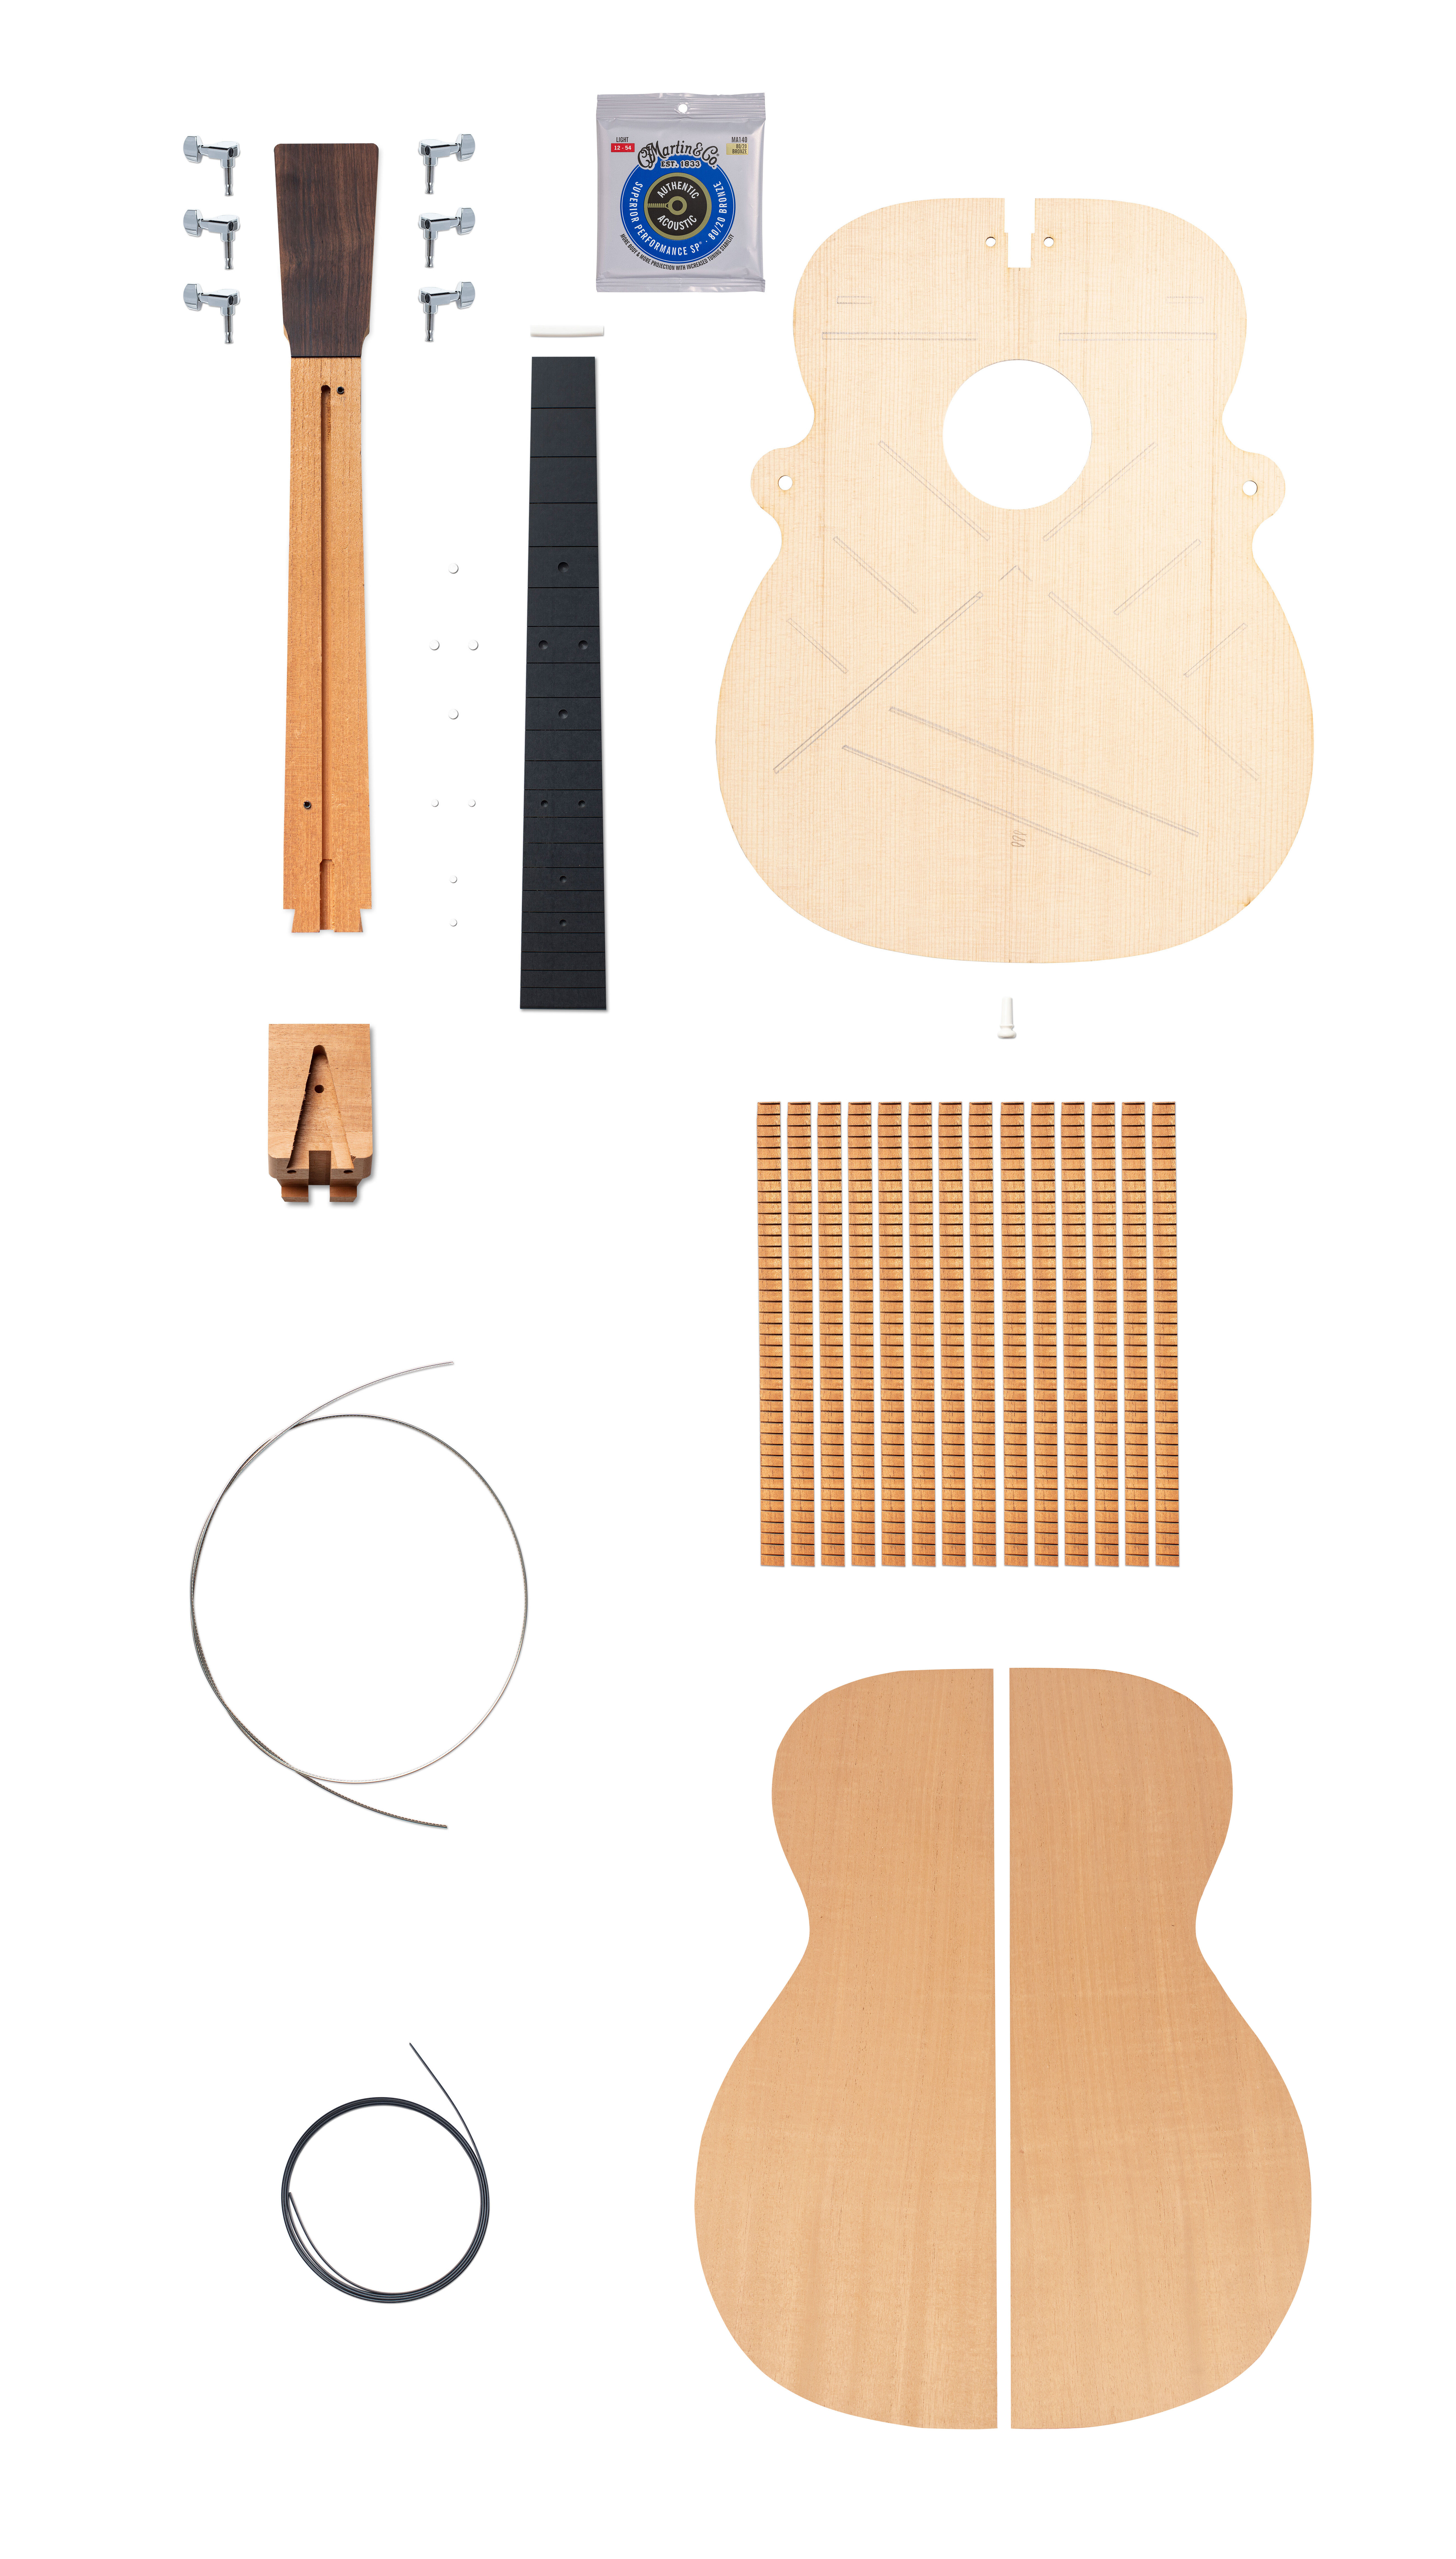 Guitar Parts: Pick Guards & Accessories | Martin Guitar